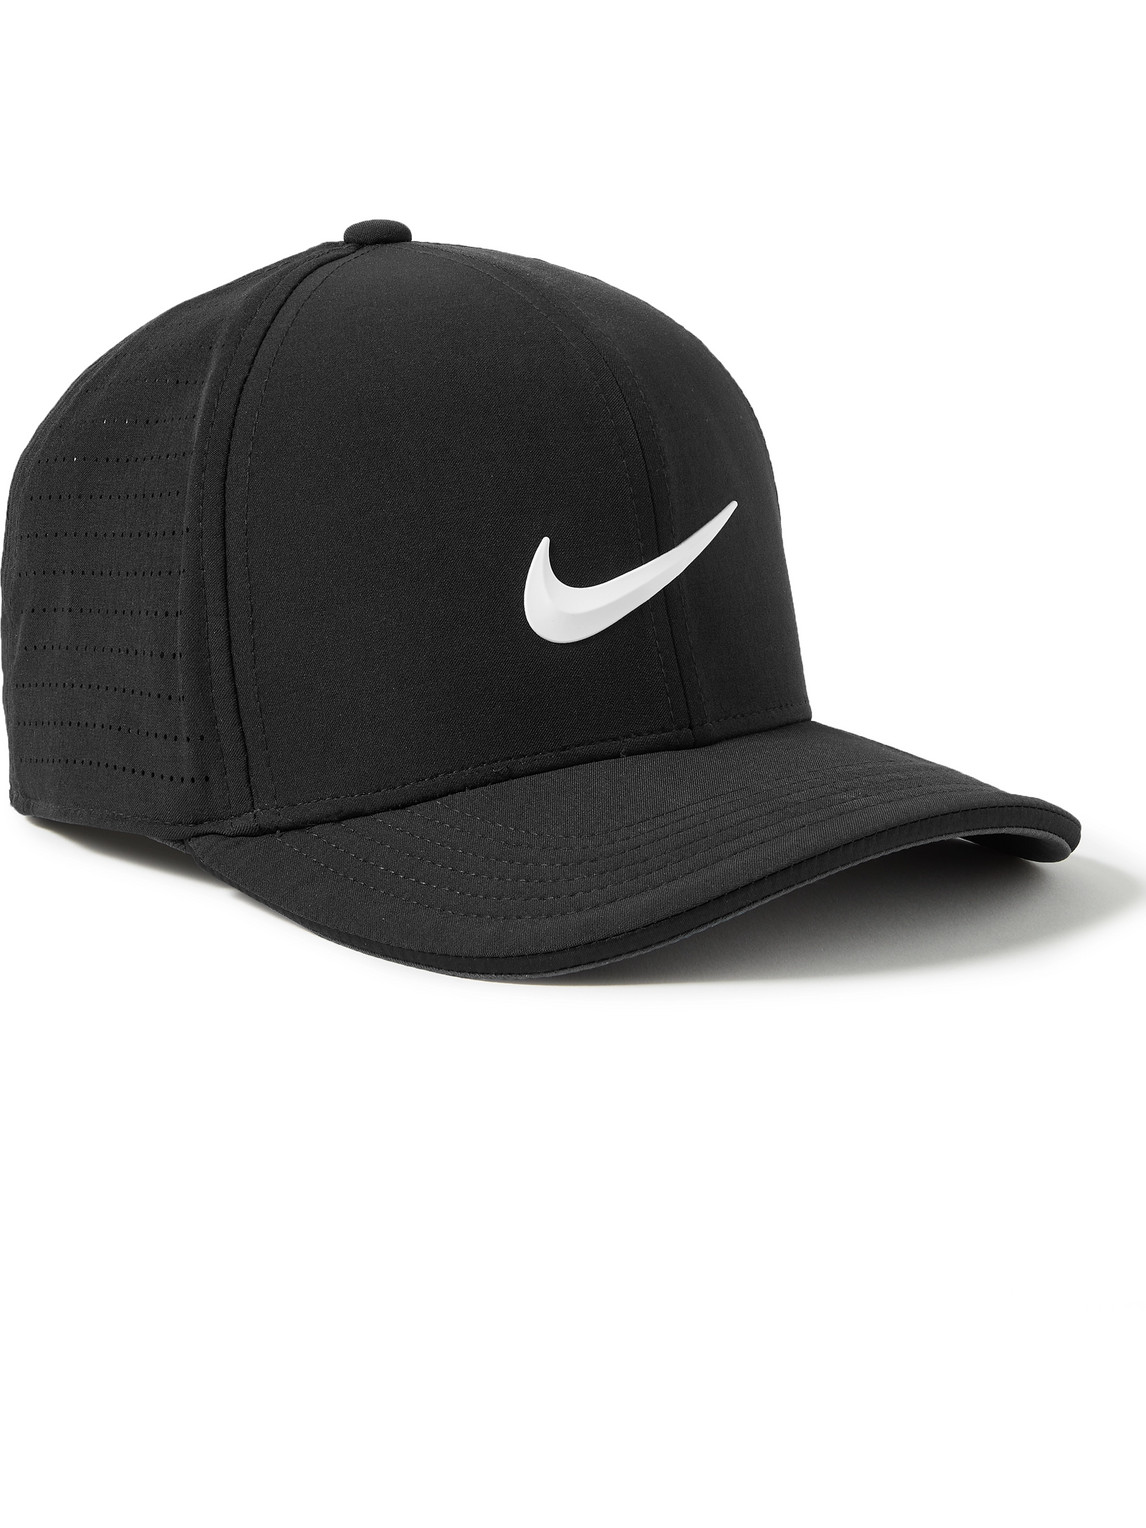 Nike Aerobill Classic99 Perforated Dri-fit Adv Golf Cap In Black